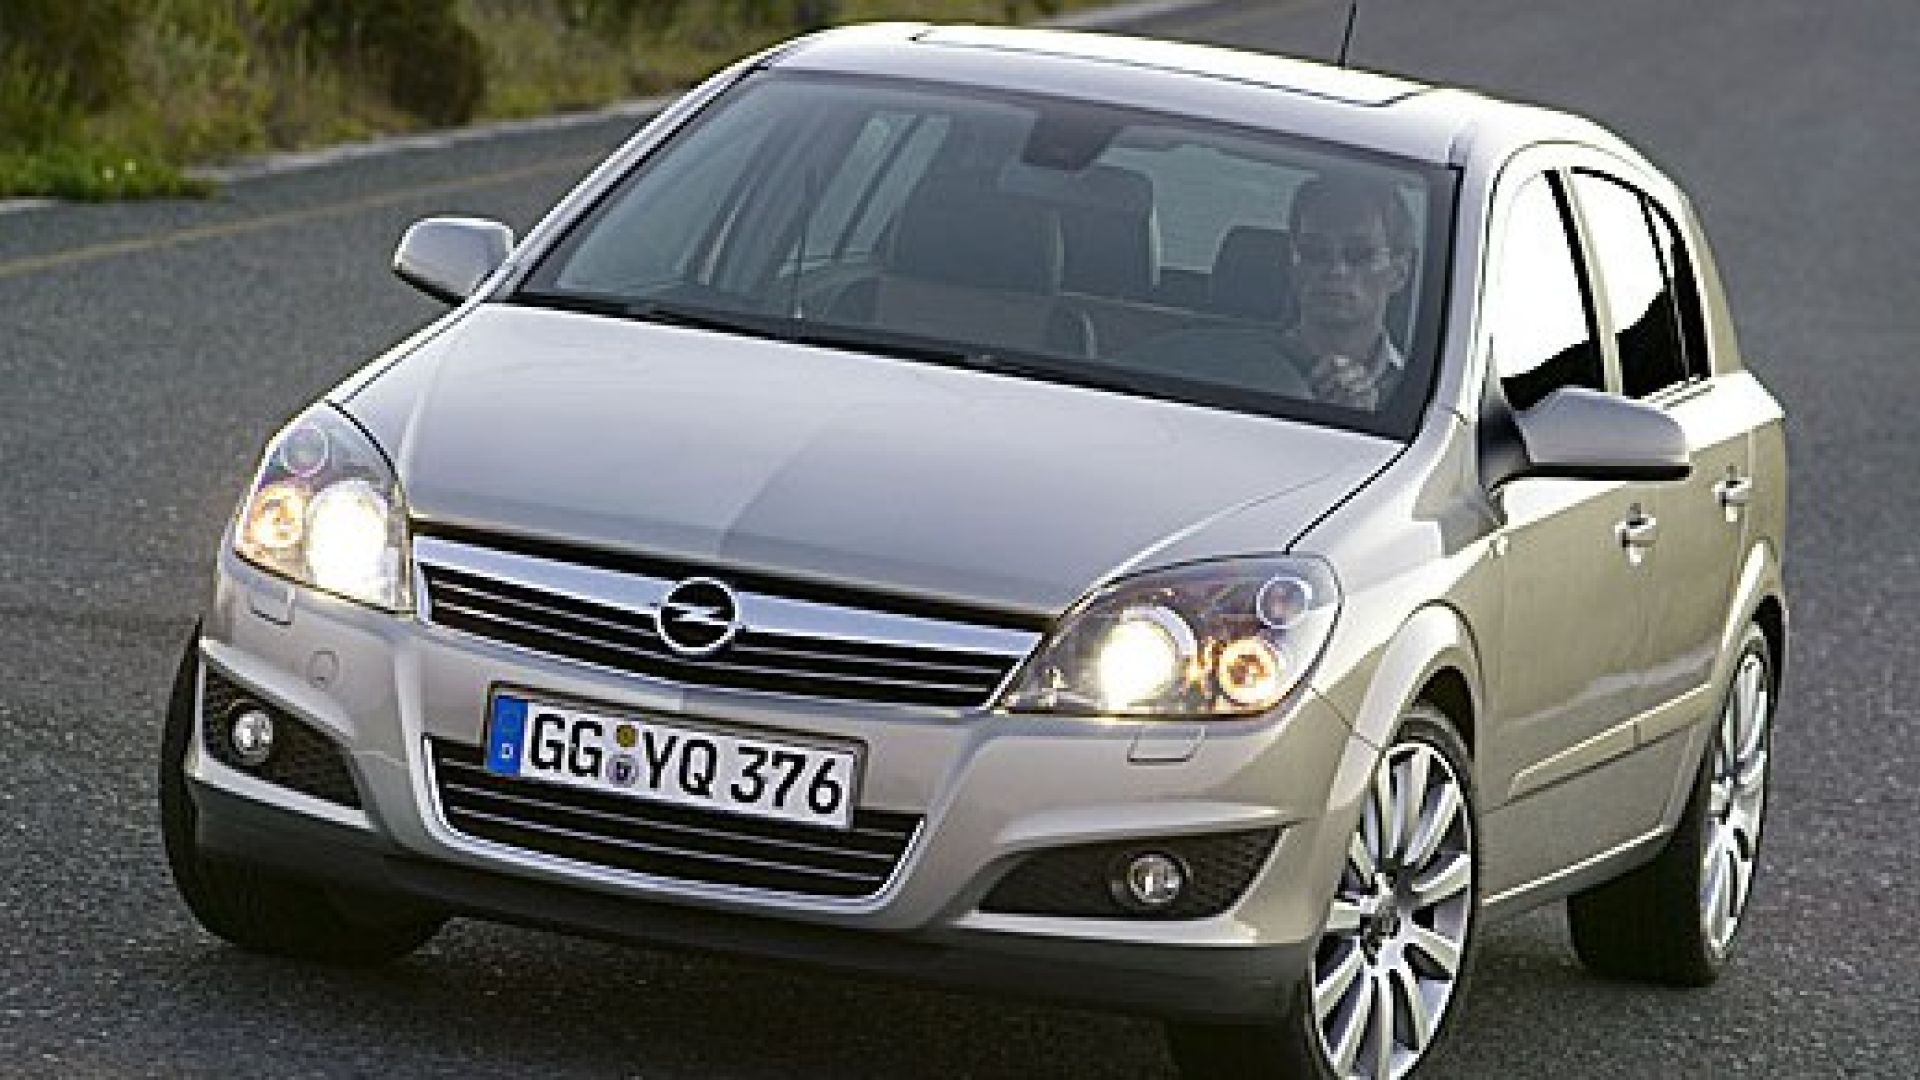 Опель хэтчбек 2007. Opel Astra h 2007. Opel Astra 2007 седан. Opel Astra h 2006 седан.